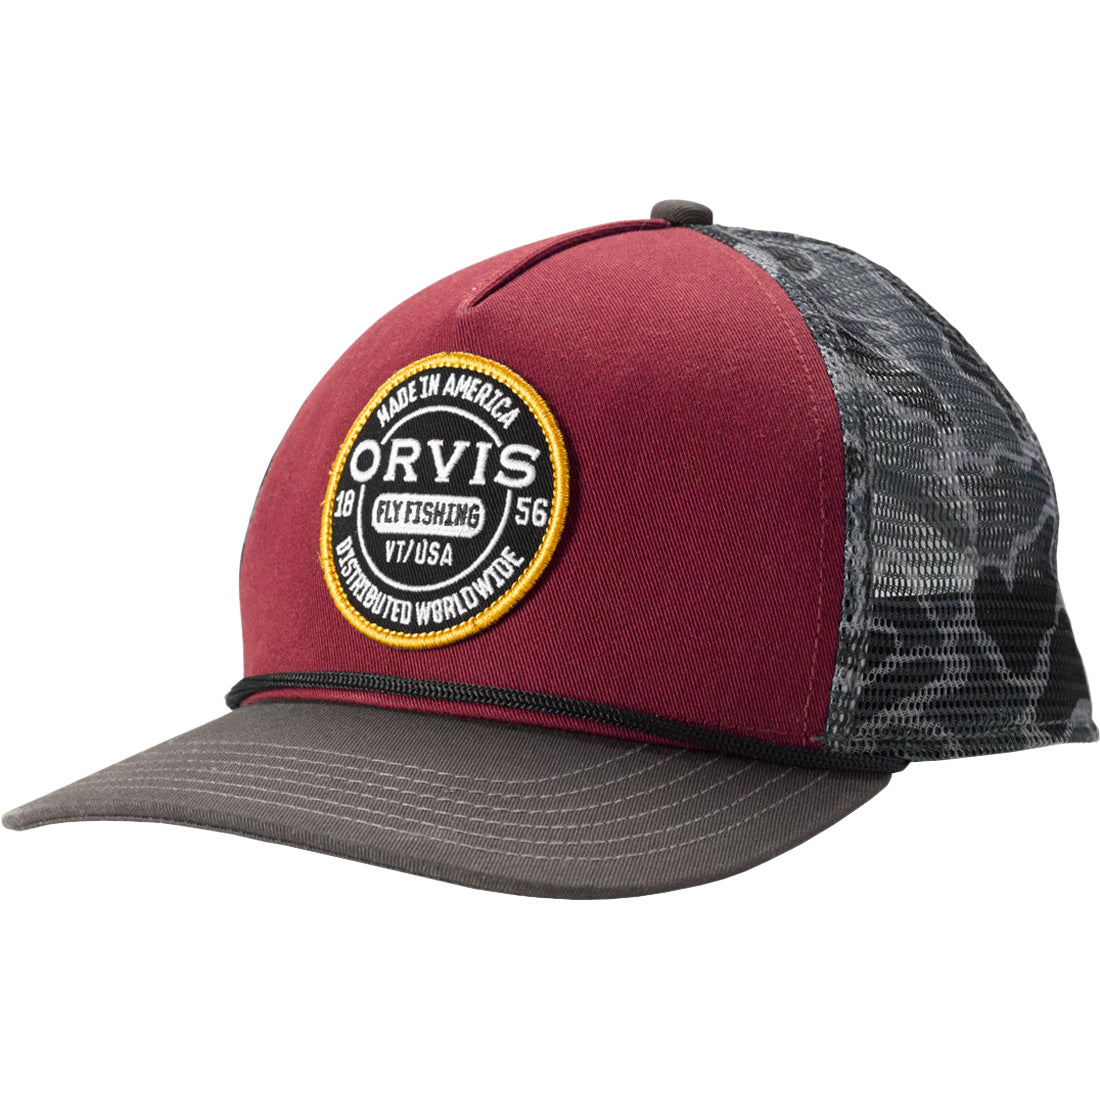 Orvis Worldwide Camo Mesh Trucker Hat